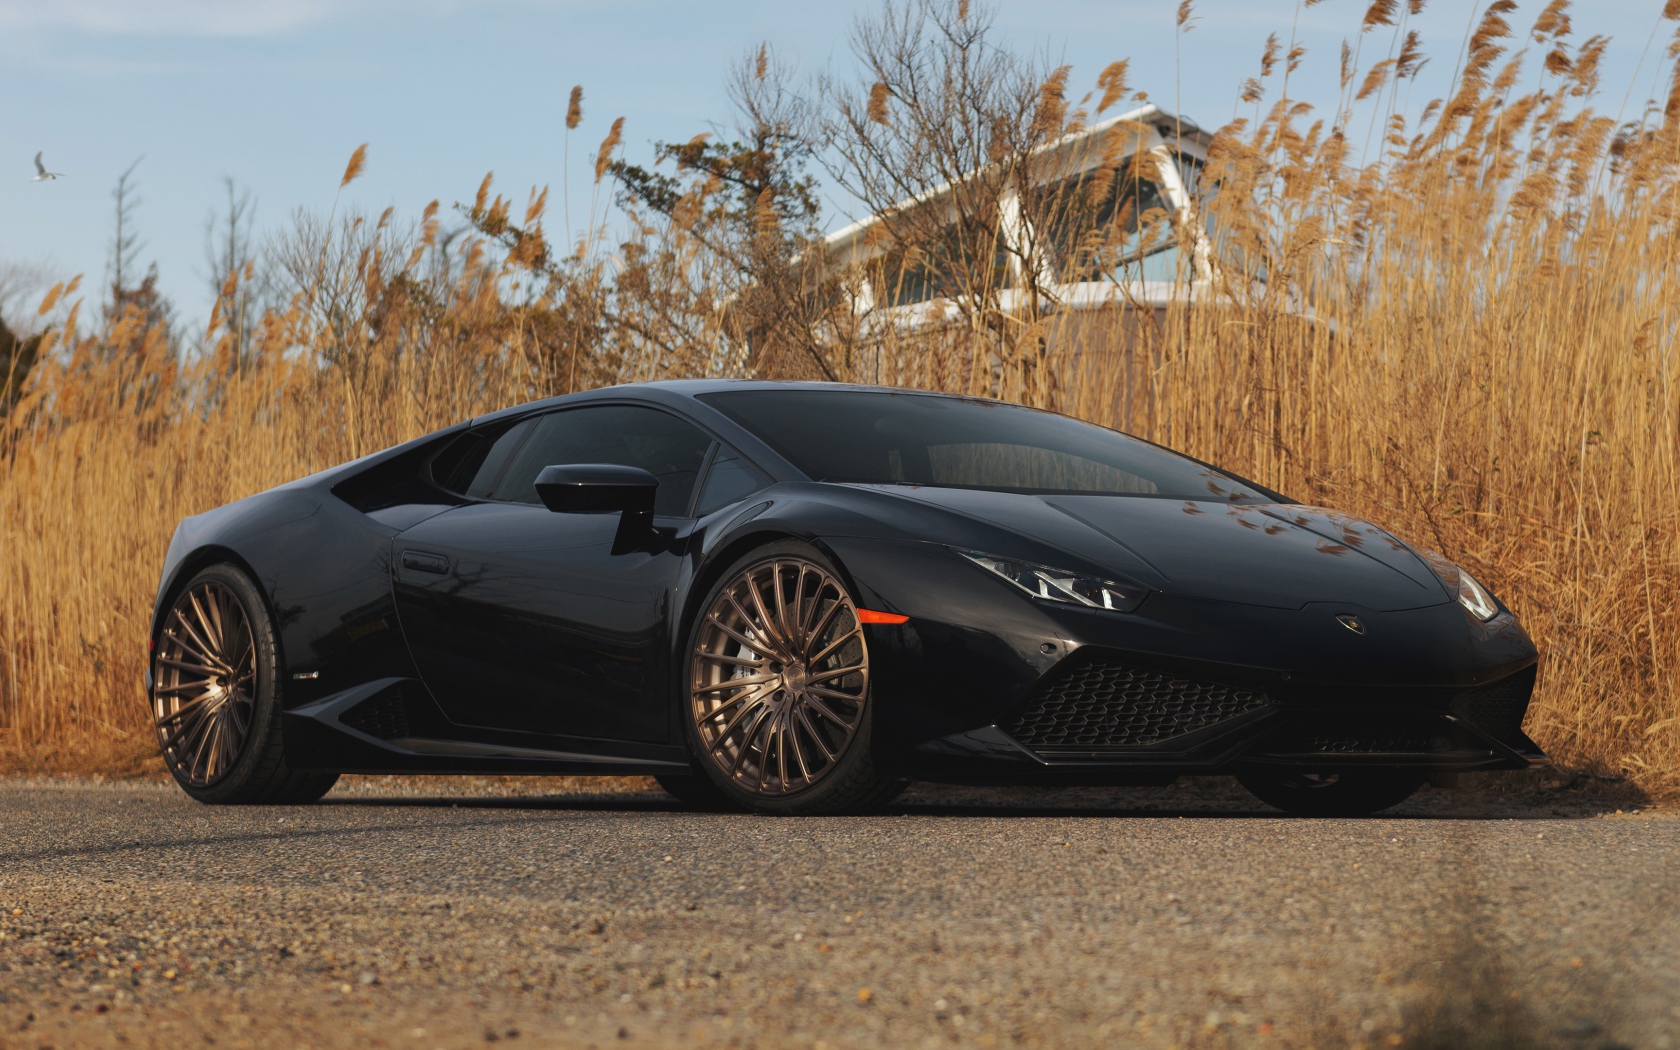 Black car Lamborghini Huracan on the background of reeds